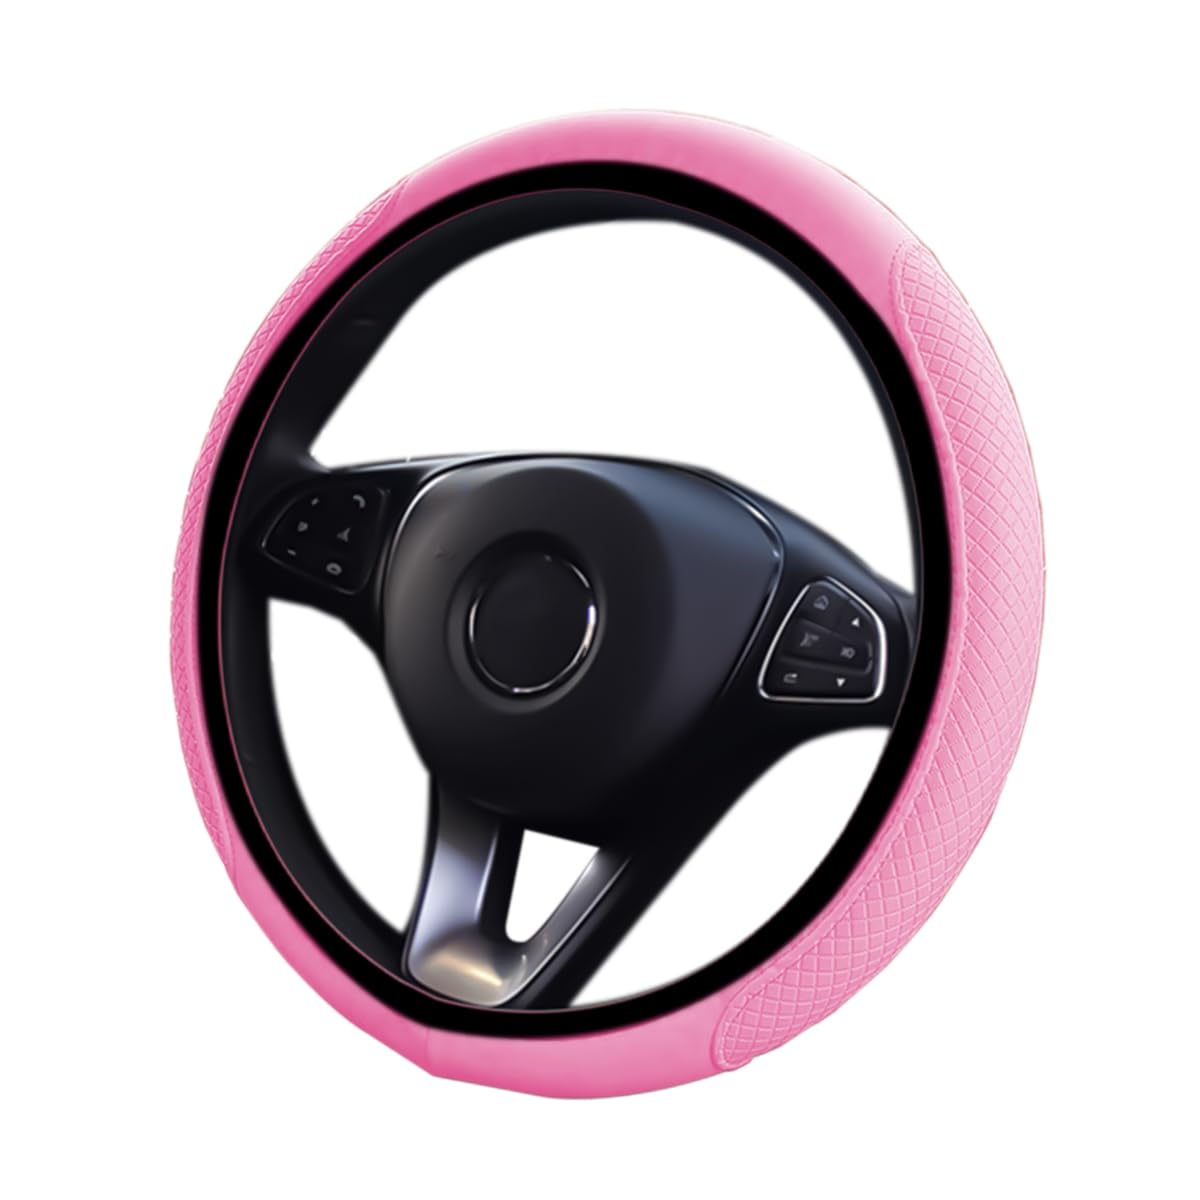 CGEAMDY Auto Lenkrad Abdeckung, Universal 38 cm Microfiber Lenkradhülle, Anti Rutsch Atmungsaktiv Lenkradabdeckung, Geruch frei Lenkradbezug Lenkradschoner(Pink) von CGEAMDY